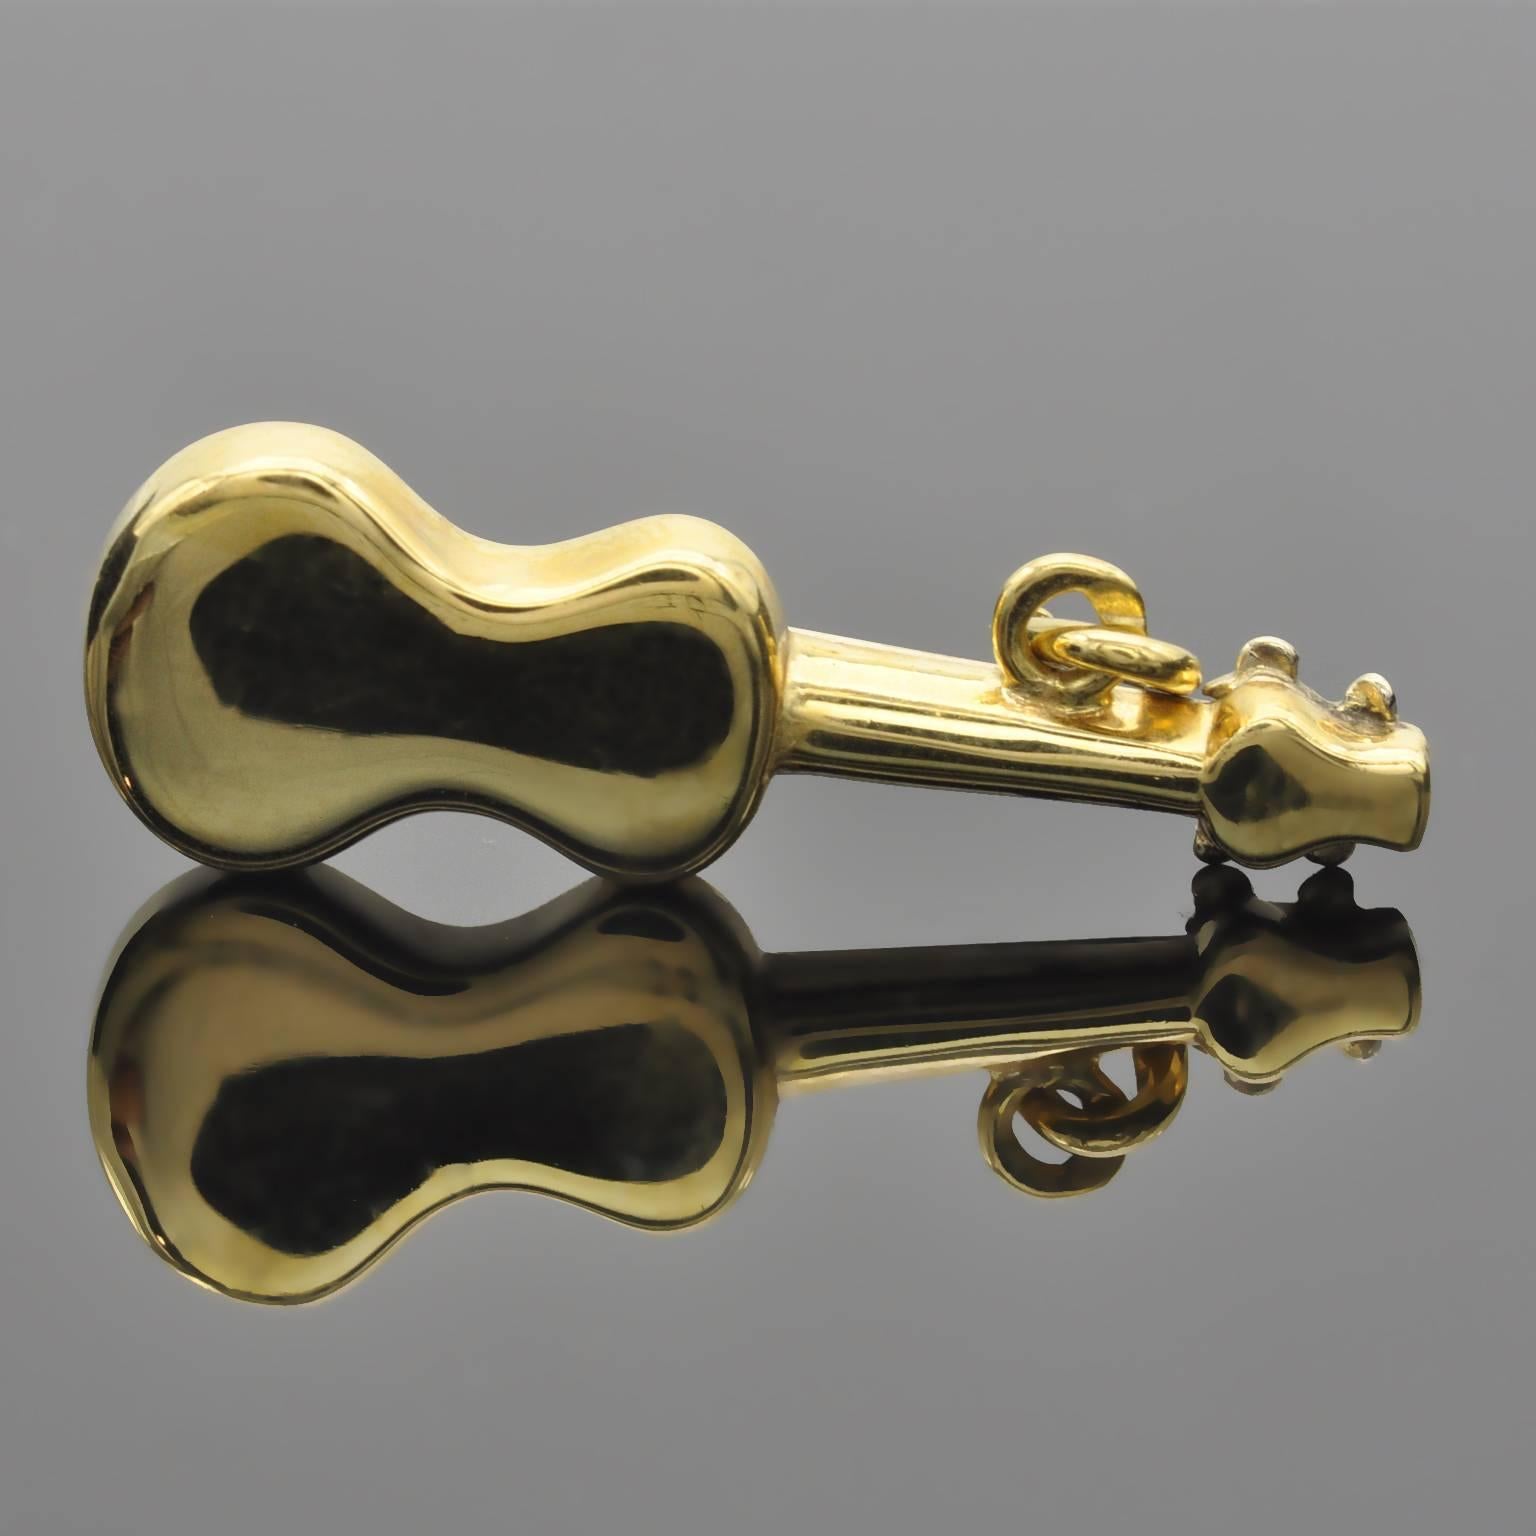 Contemporary Gold Guitar Amulet Charm Pendant